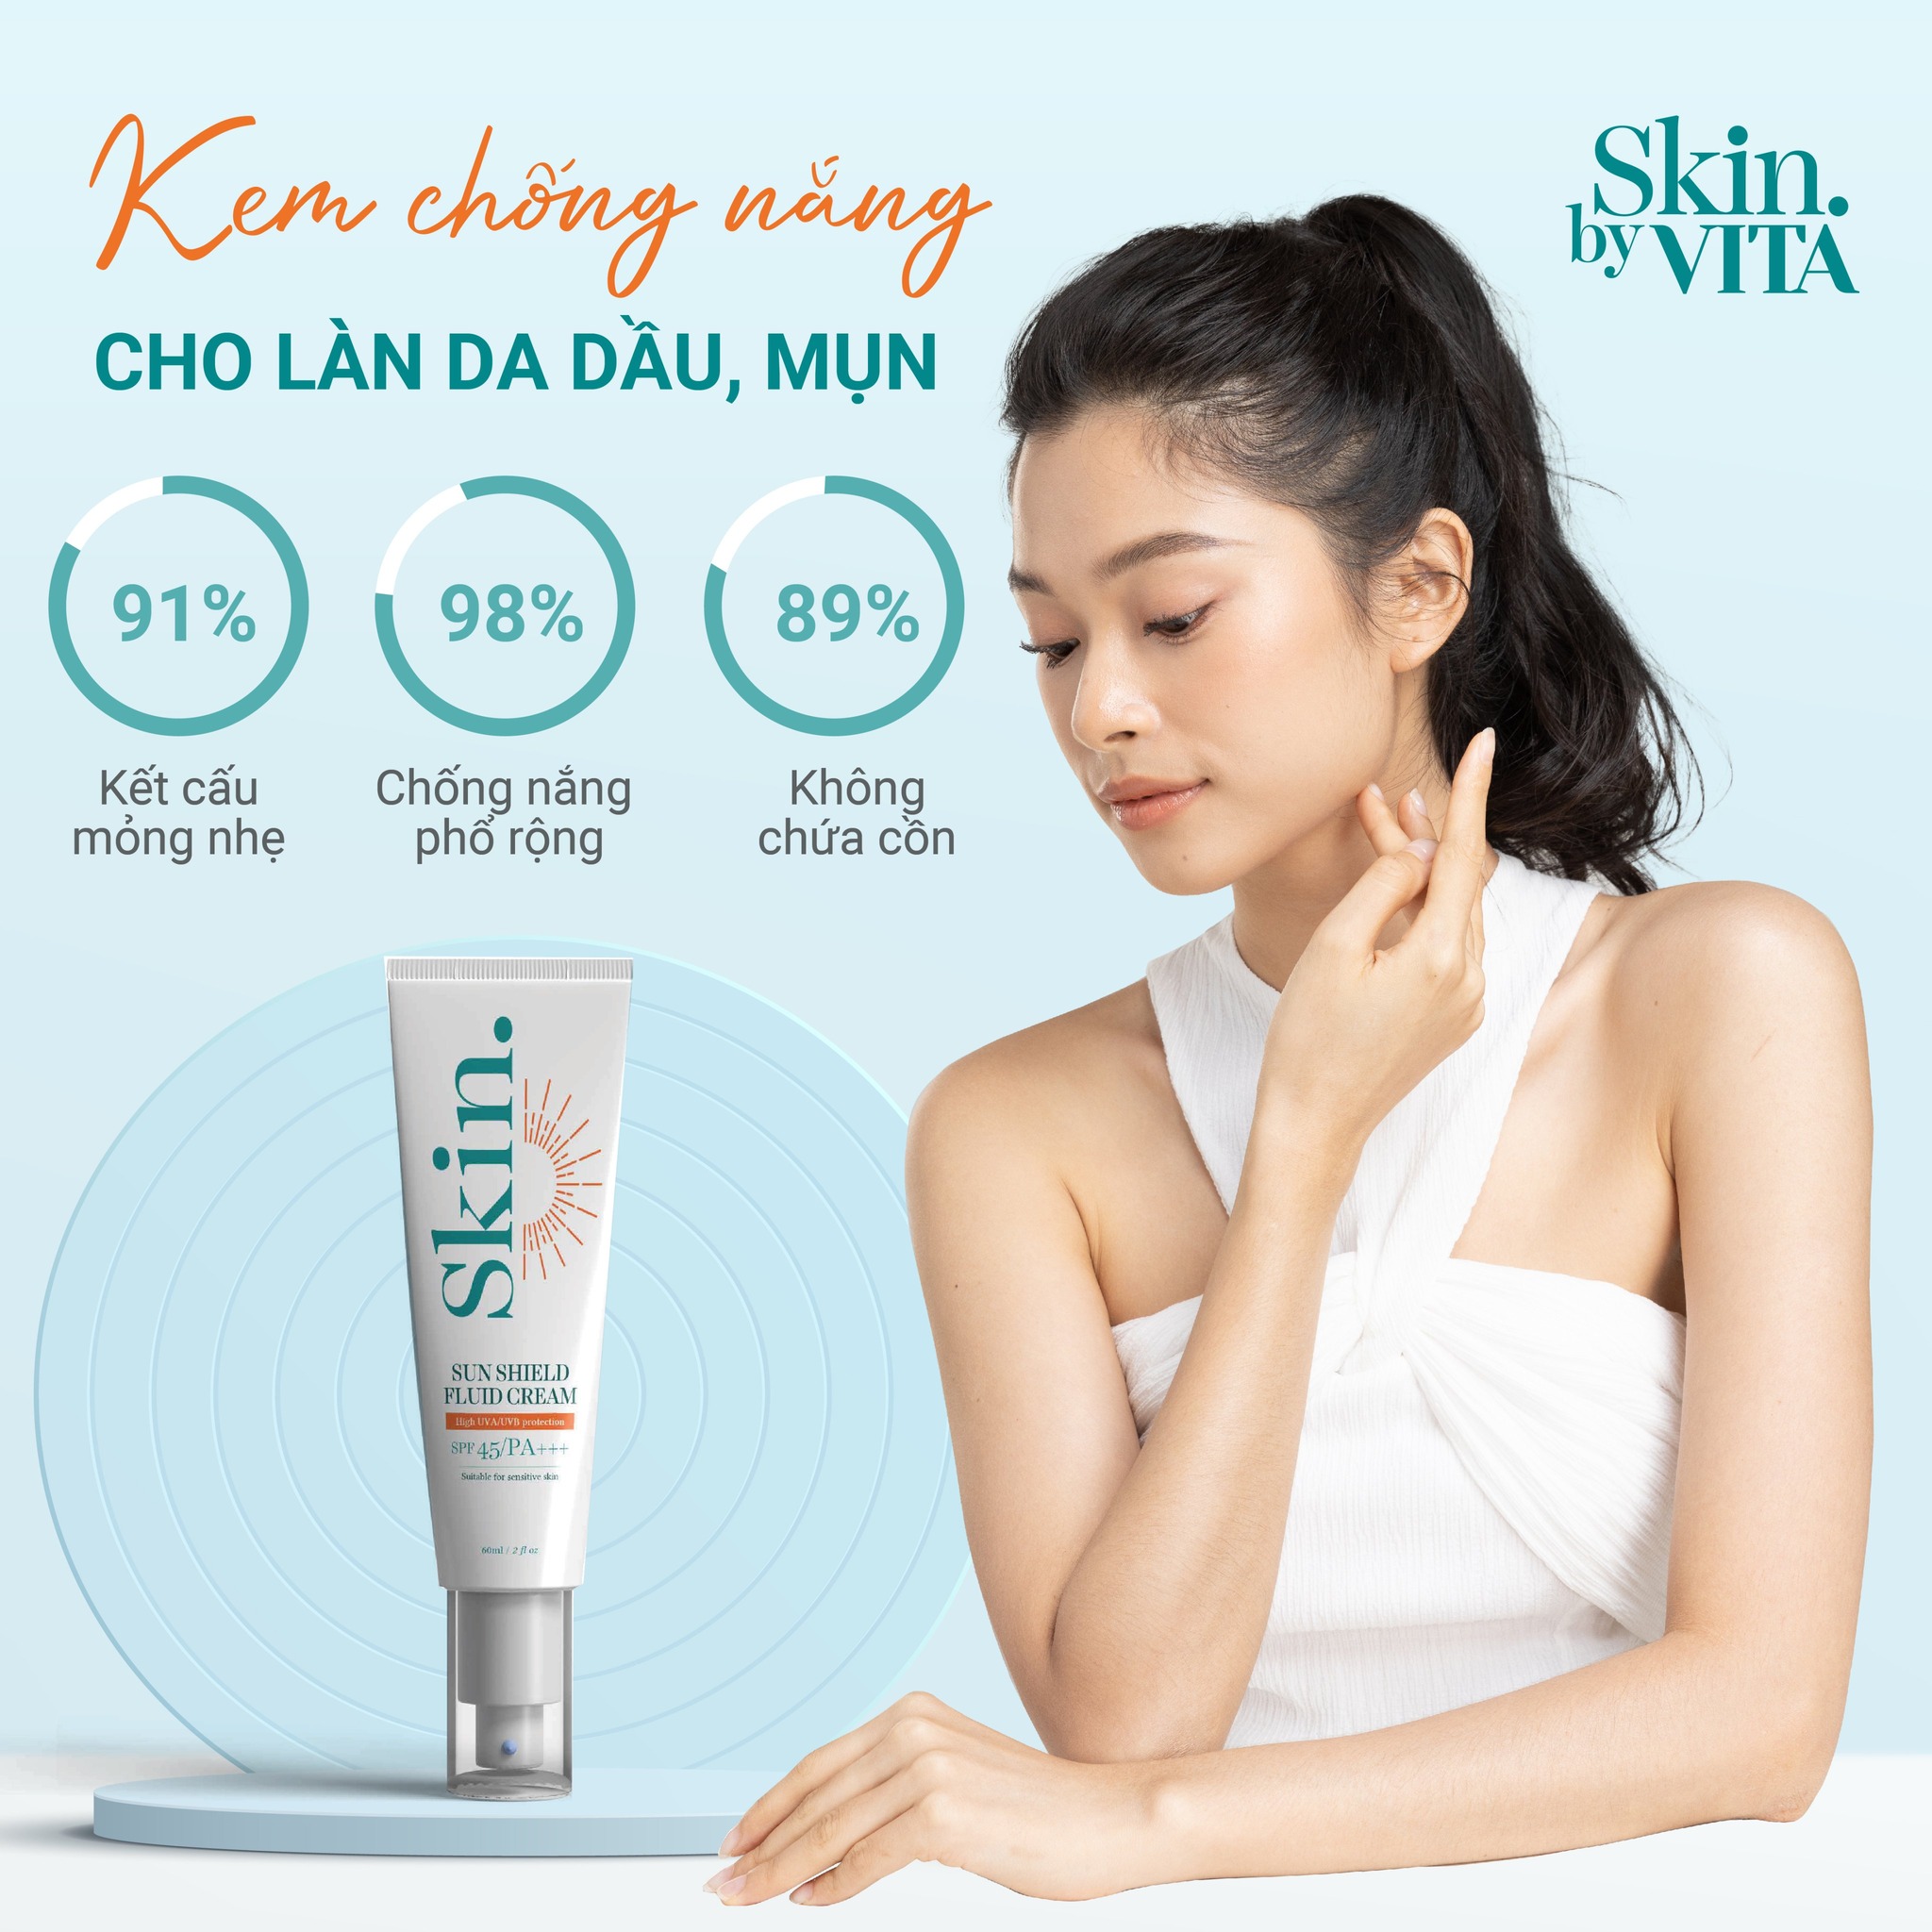 Kem chống nắng Skin. by VITA 60ml - Sunshield Fluid Cream